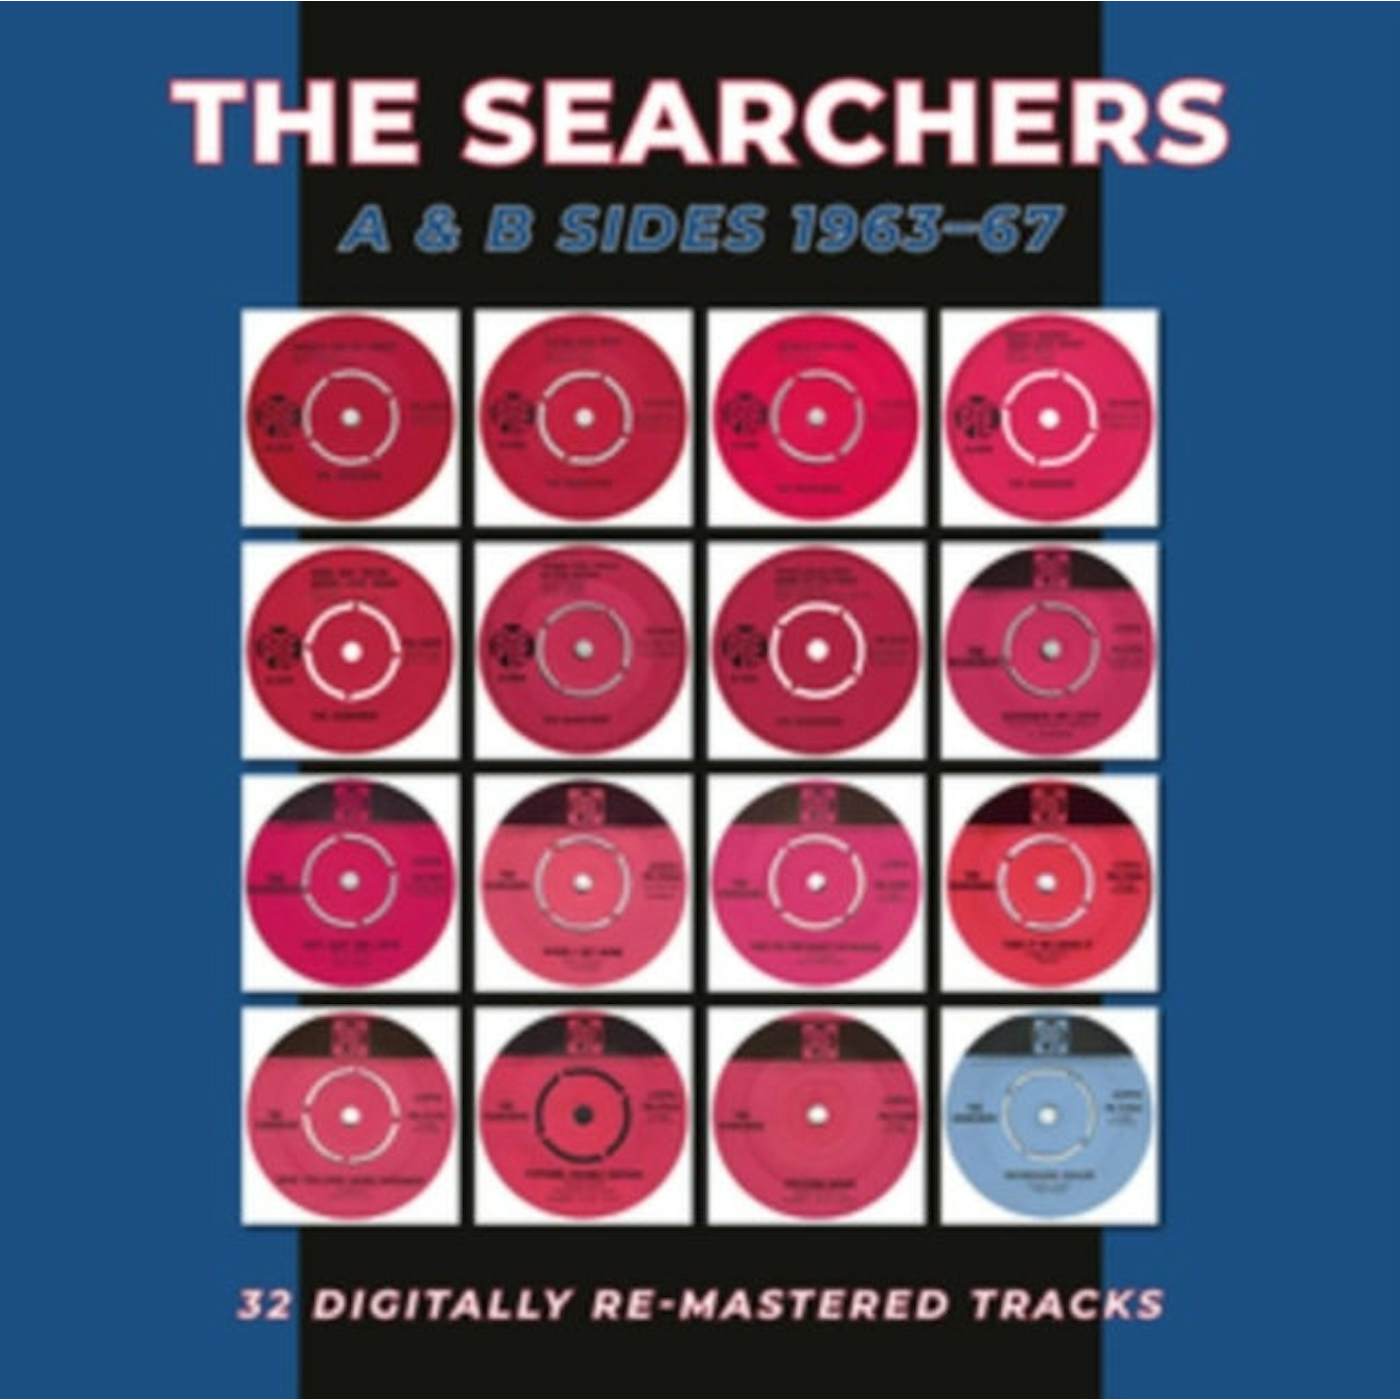 The Searchers LP Vinyl Record - A & B Sides 19 63-67